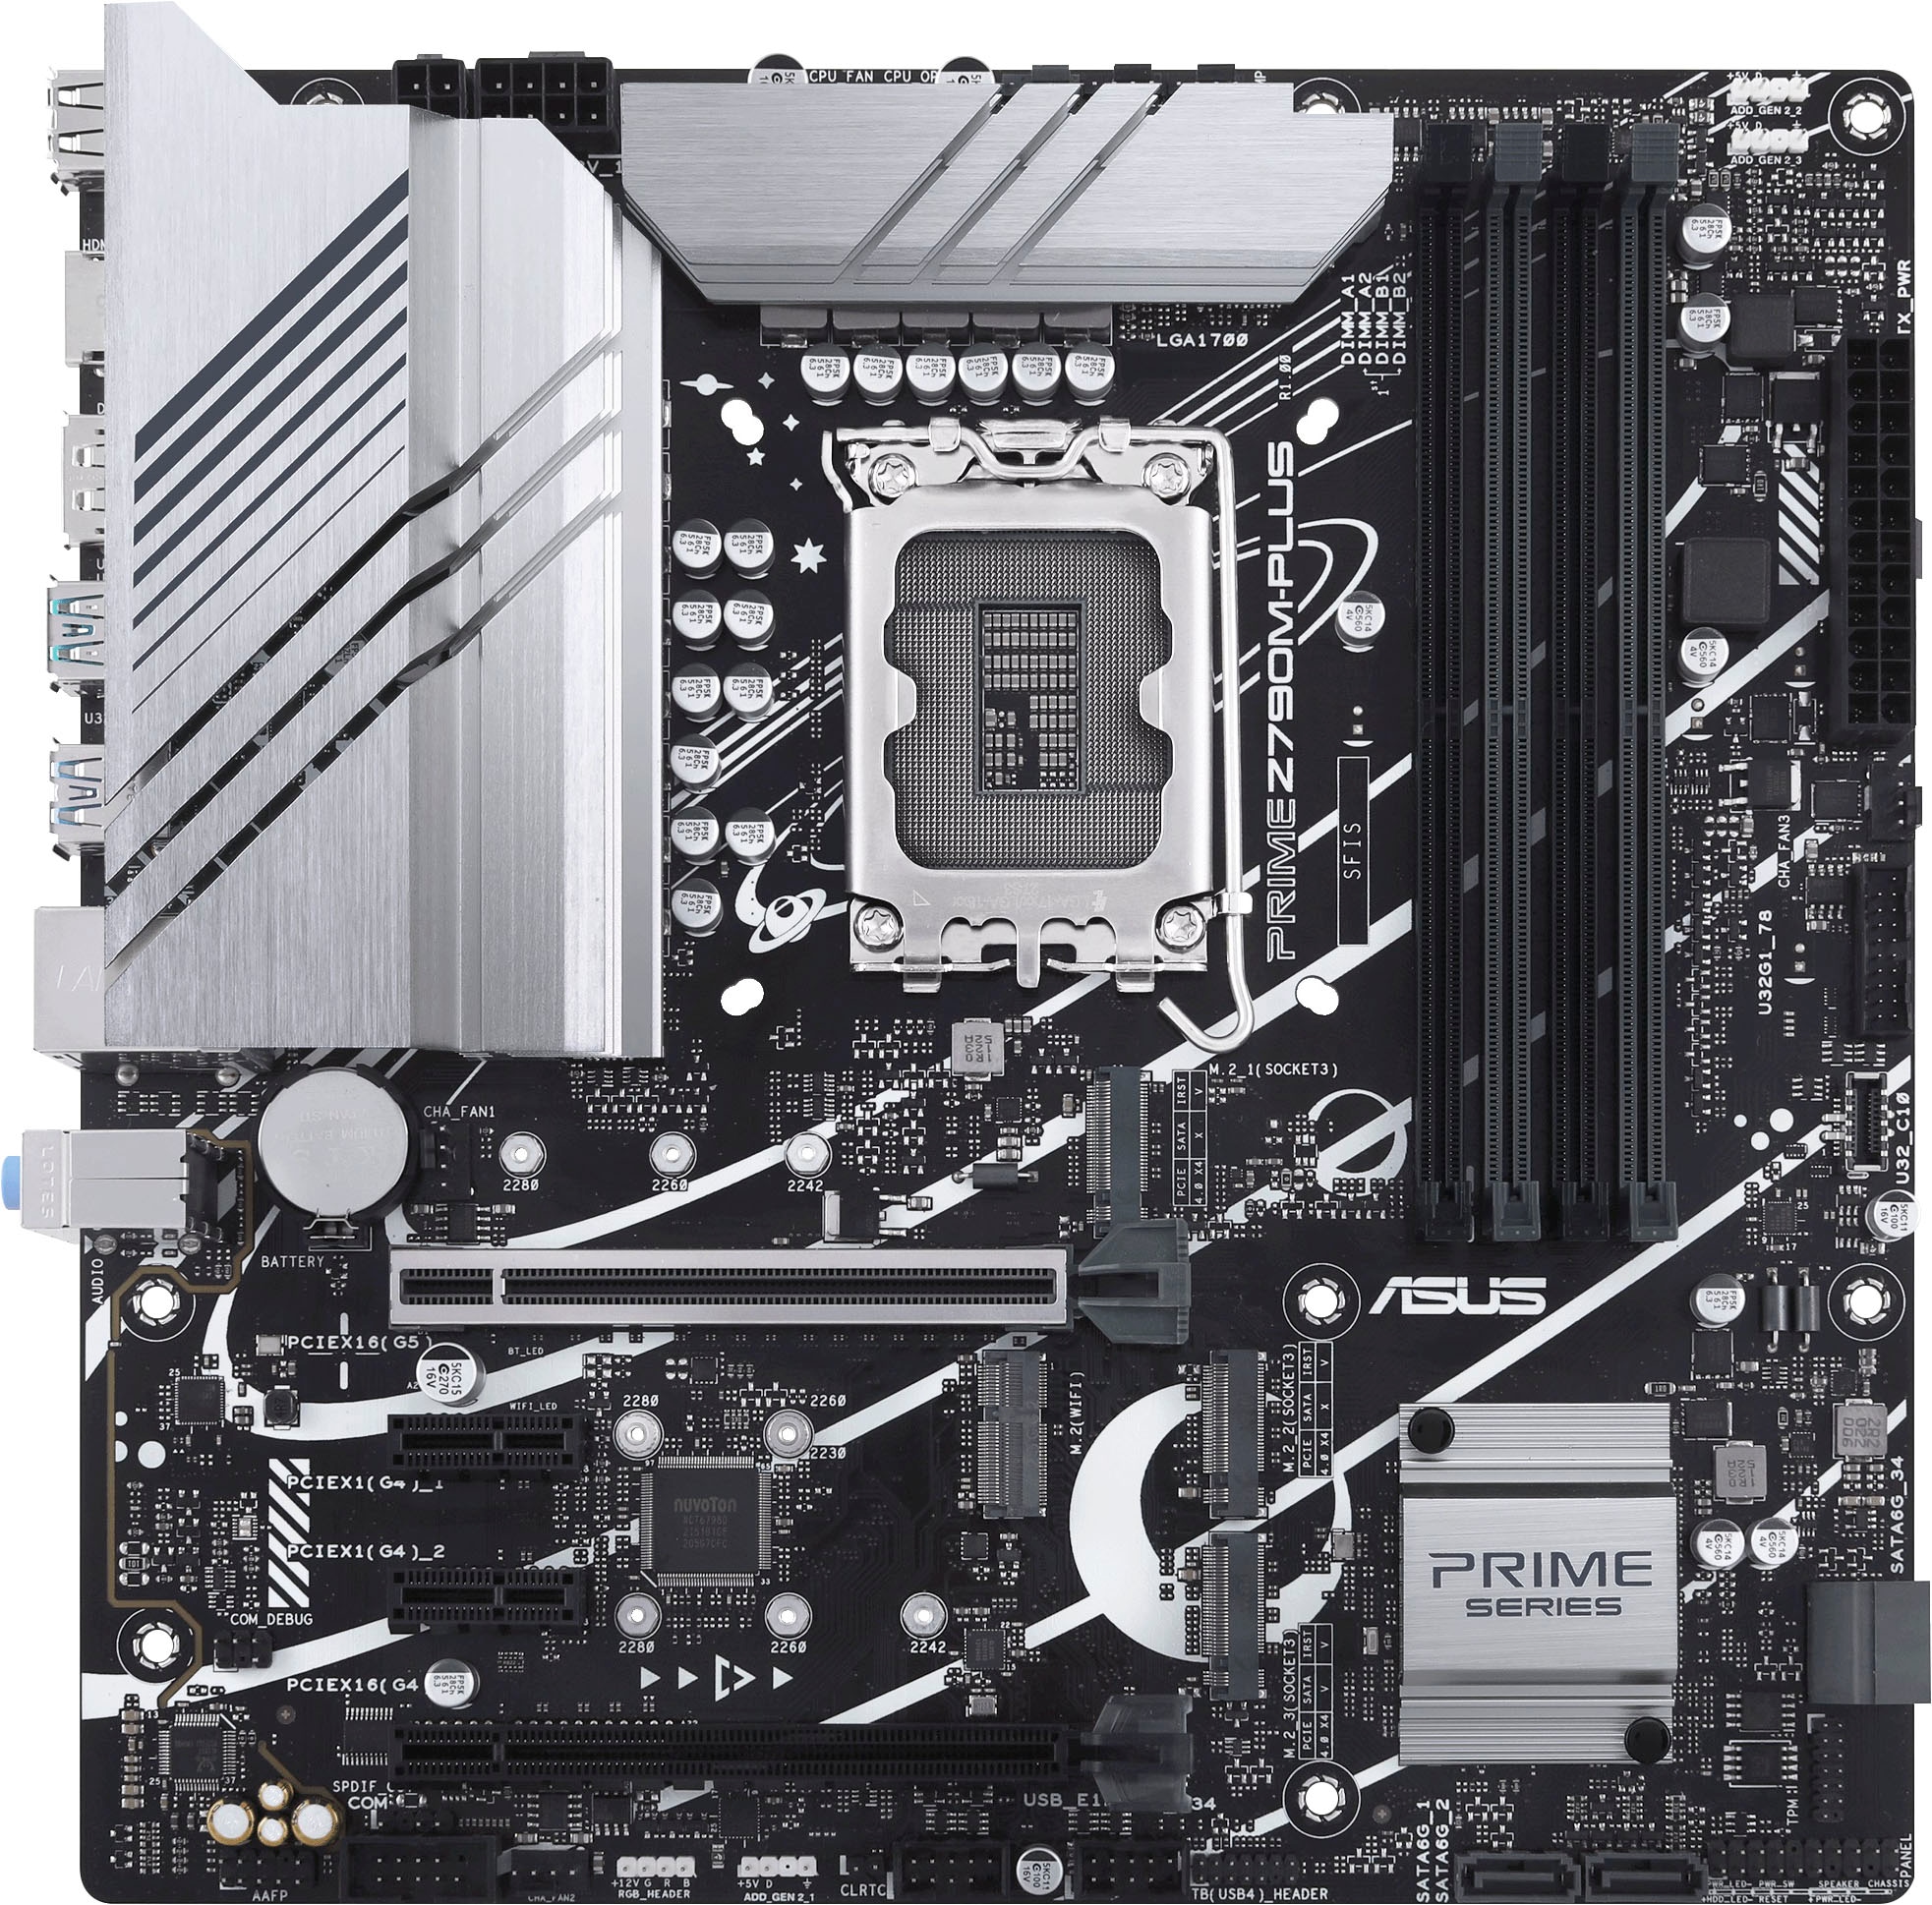 Asus Mainboard »PRIME Z790M-PLUS«, Micro ATX, HDMI, DisplayPort, DDR-5